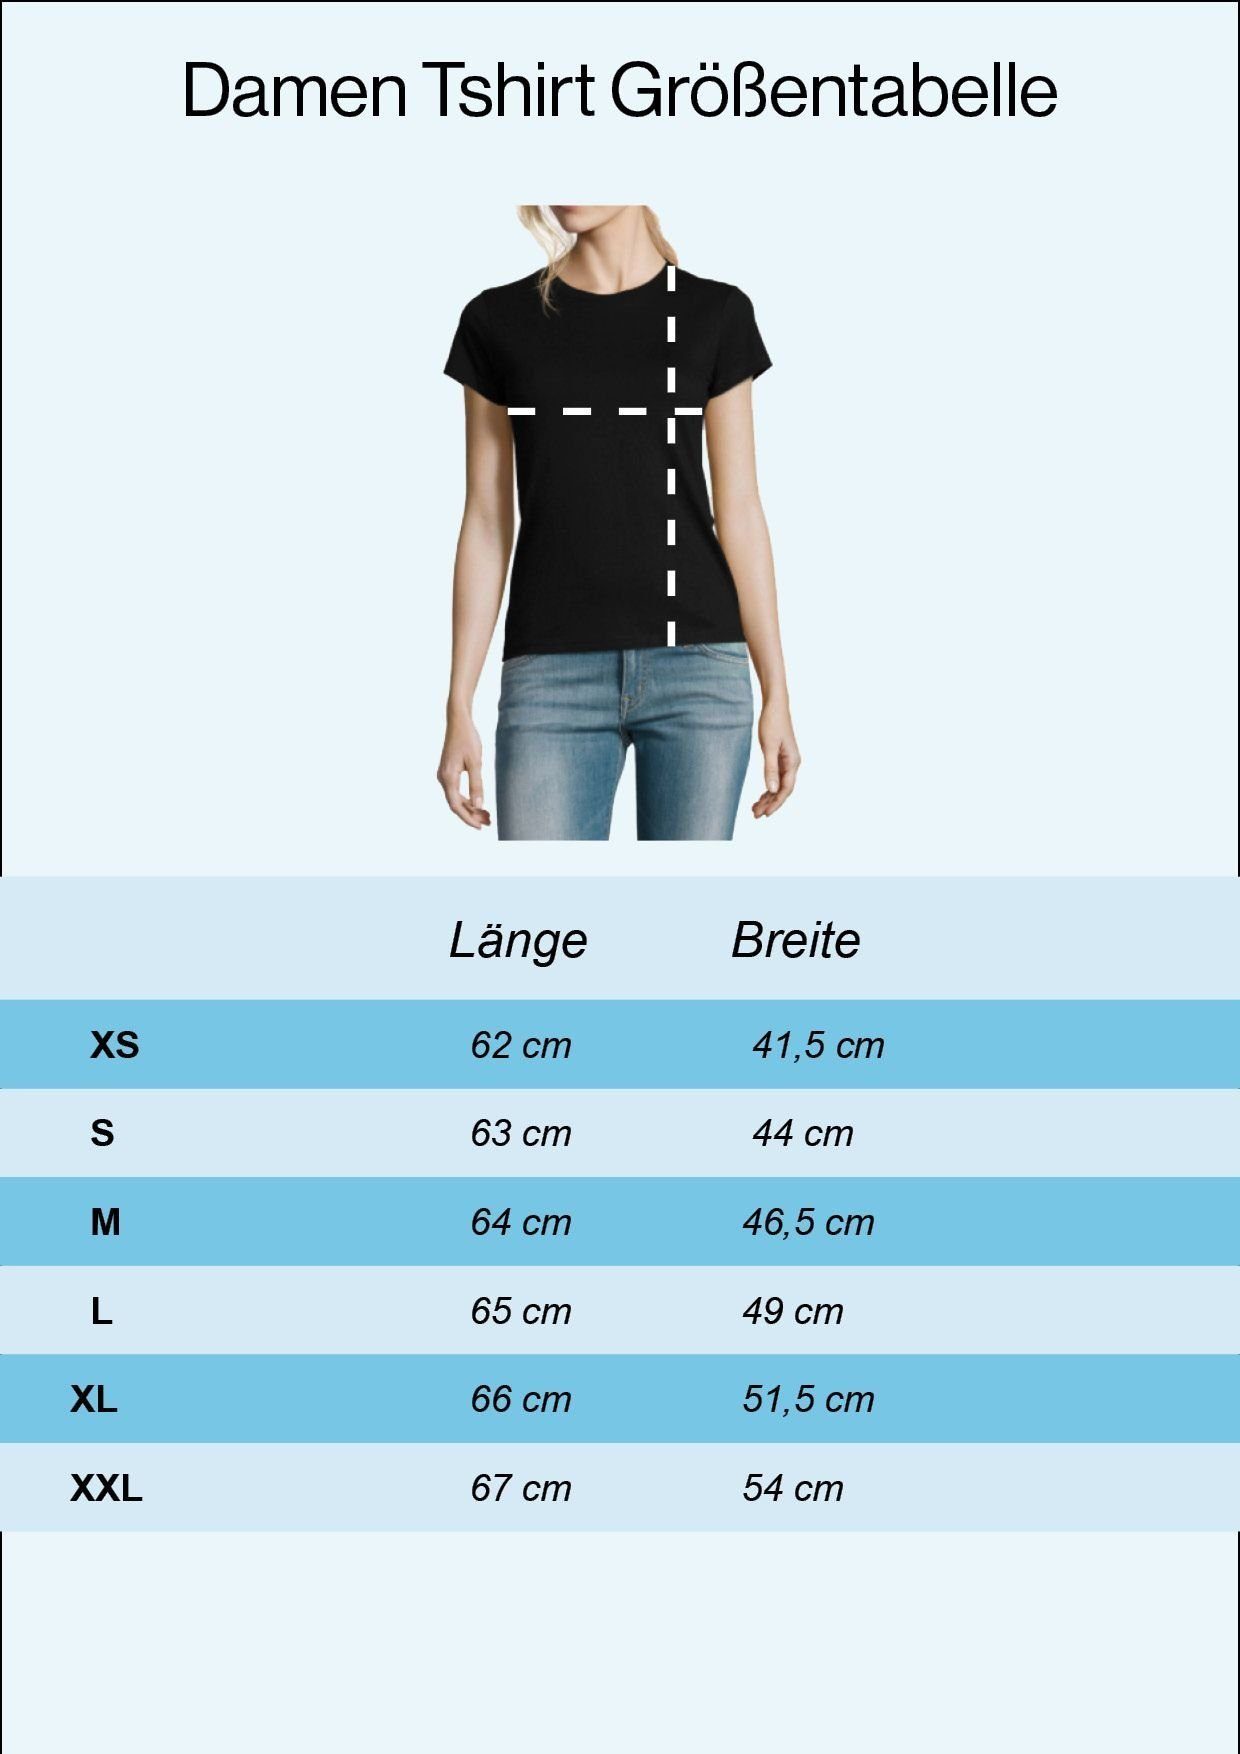 Designz Muss Den T-Shirt Zu trendigem Youth mit Schwarz Ich Damen Shirt Frontprint Bergen